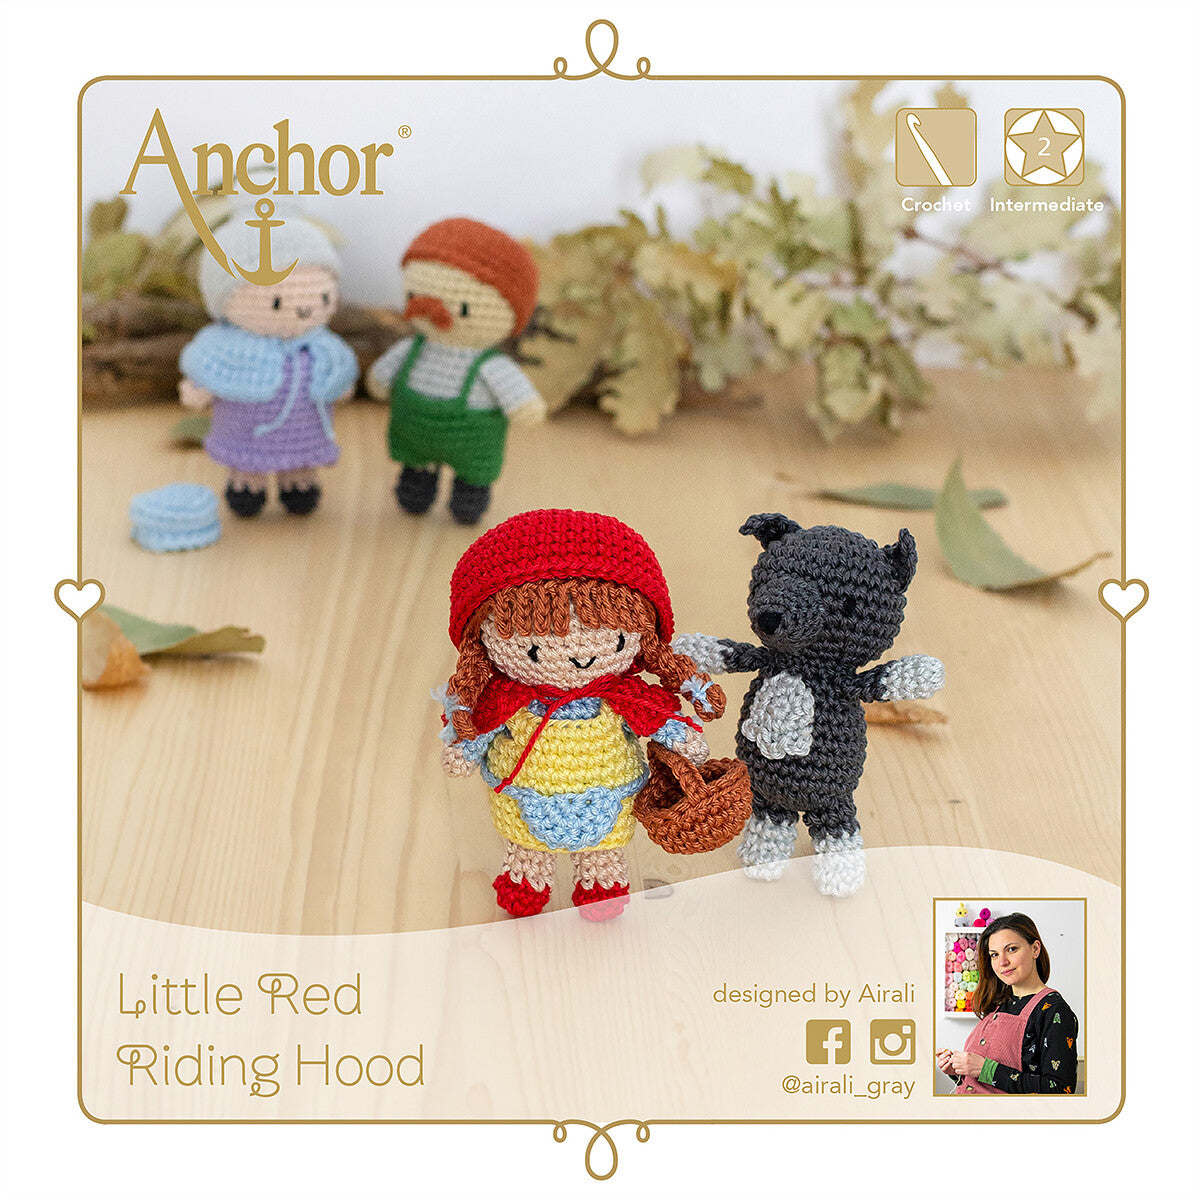 Anchor Little Red Riding Hood Amigurumi Set - A28C003-09063